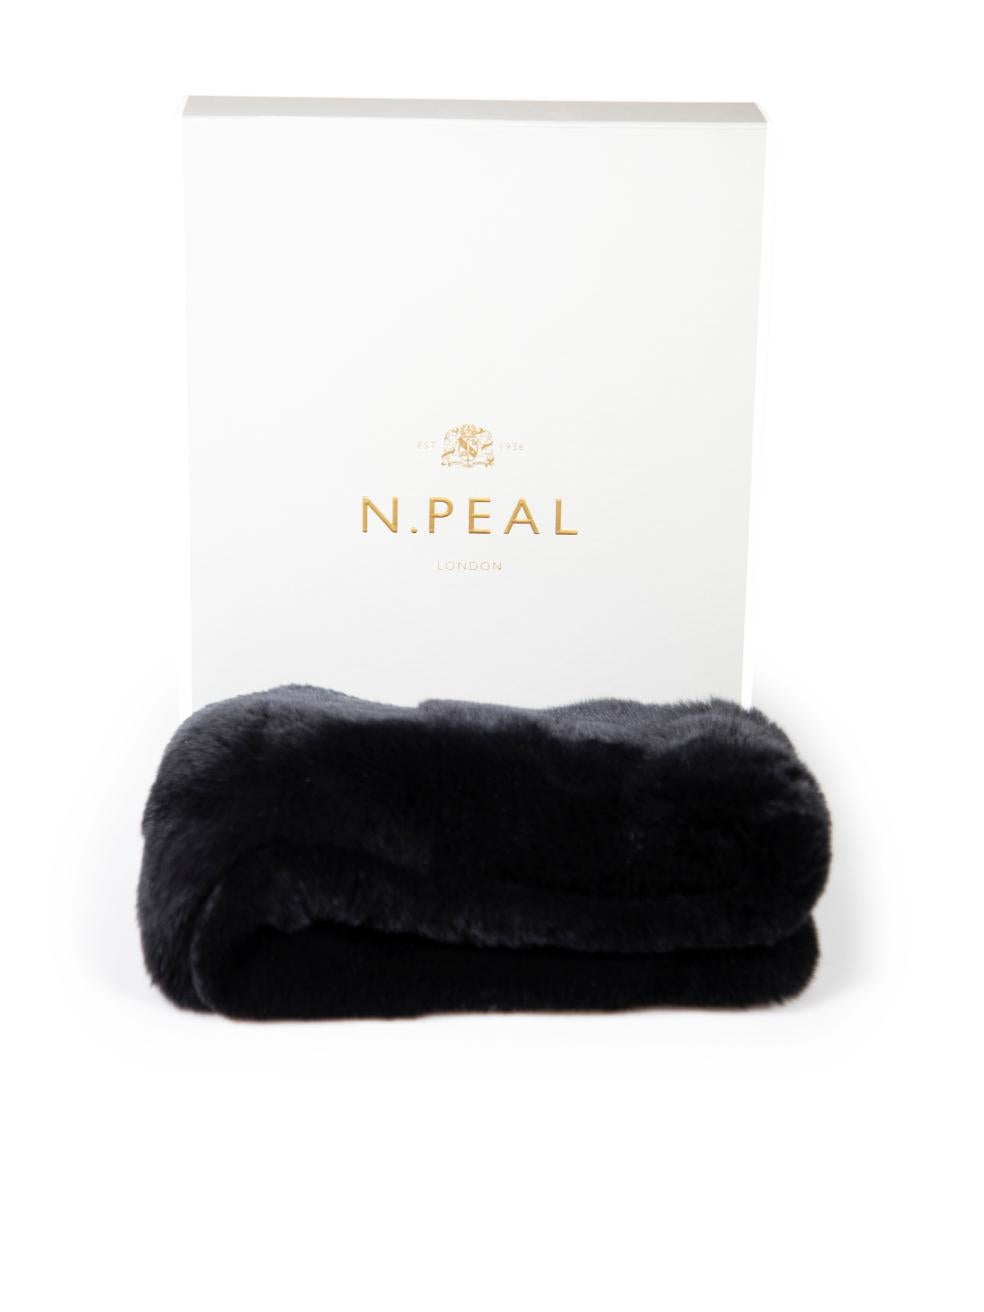 N. PEAL Black Cashmere & Rabbit Fur Scarf For Sale 1